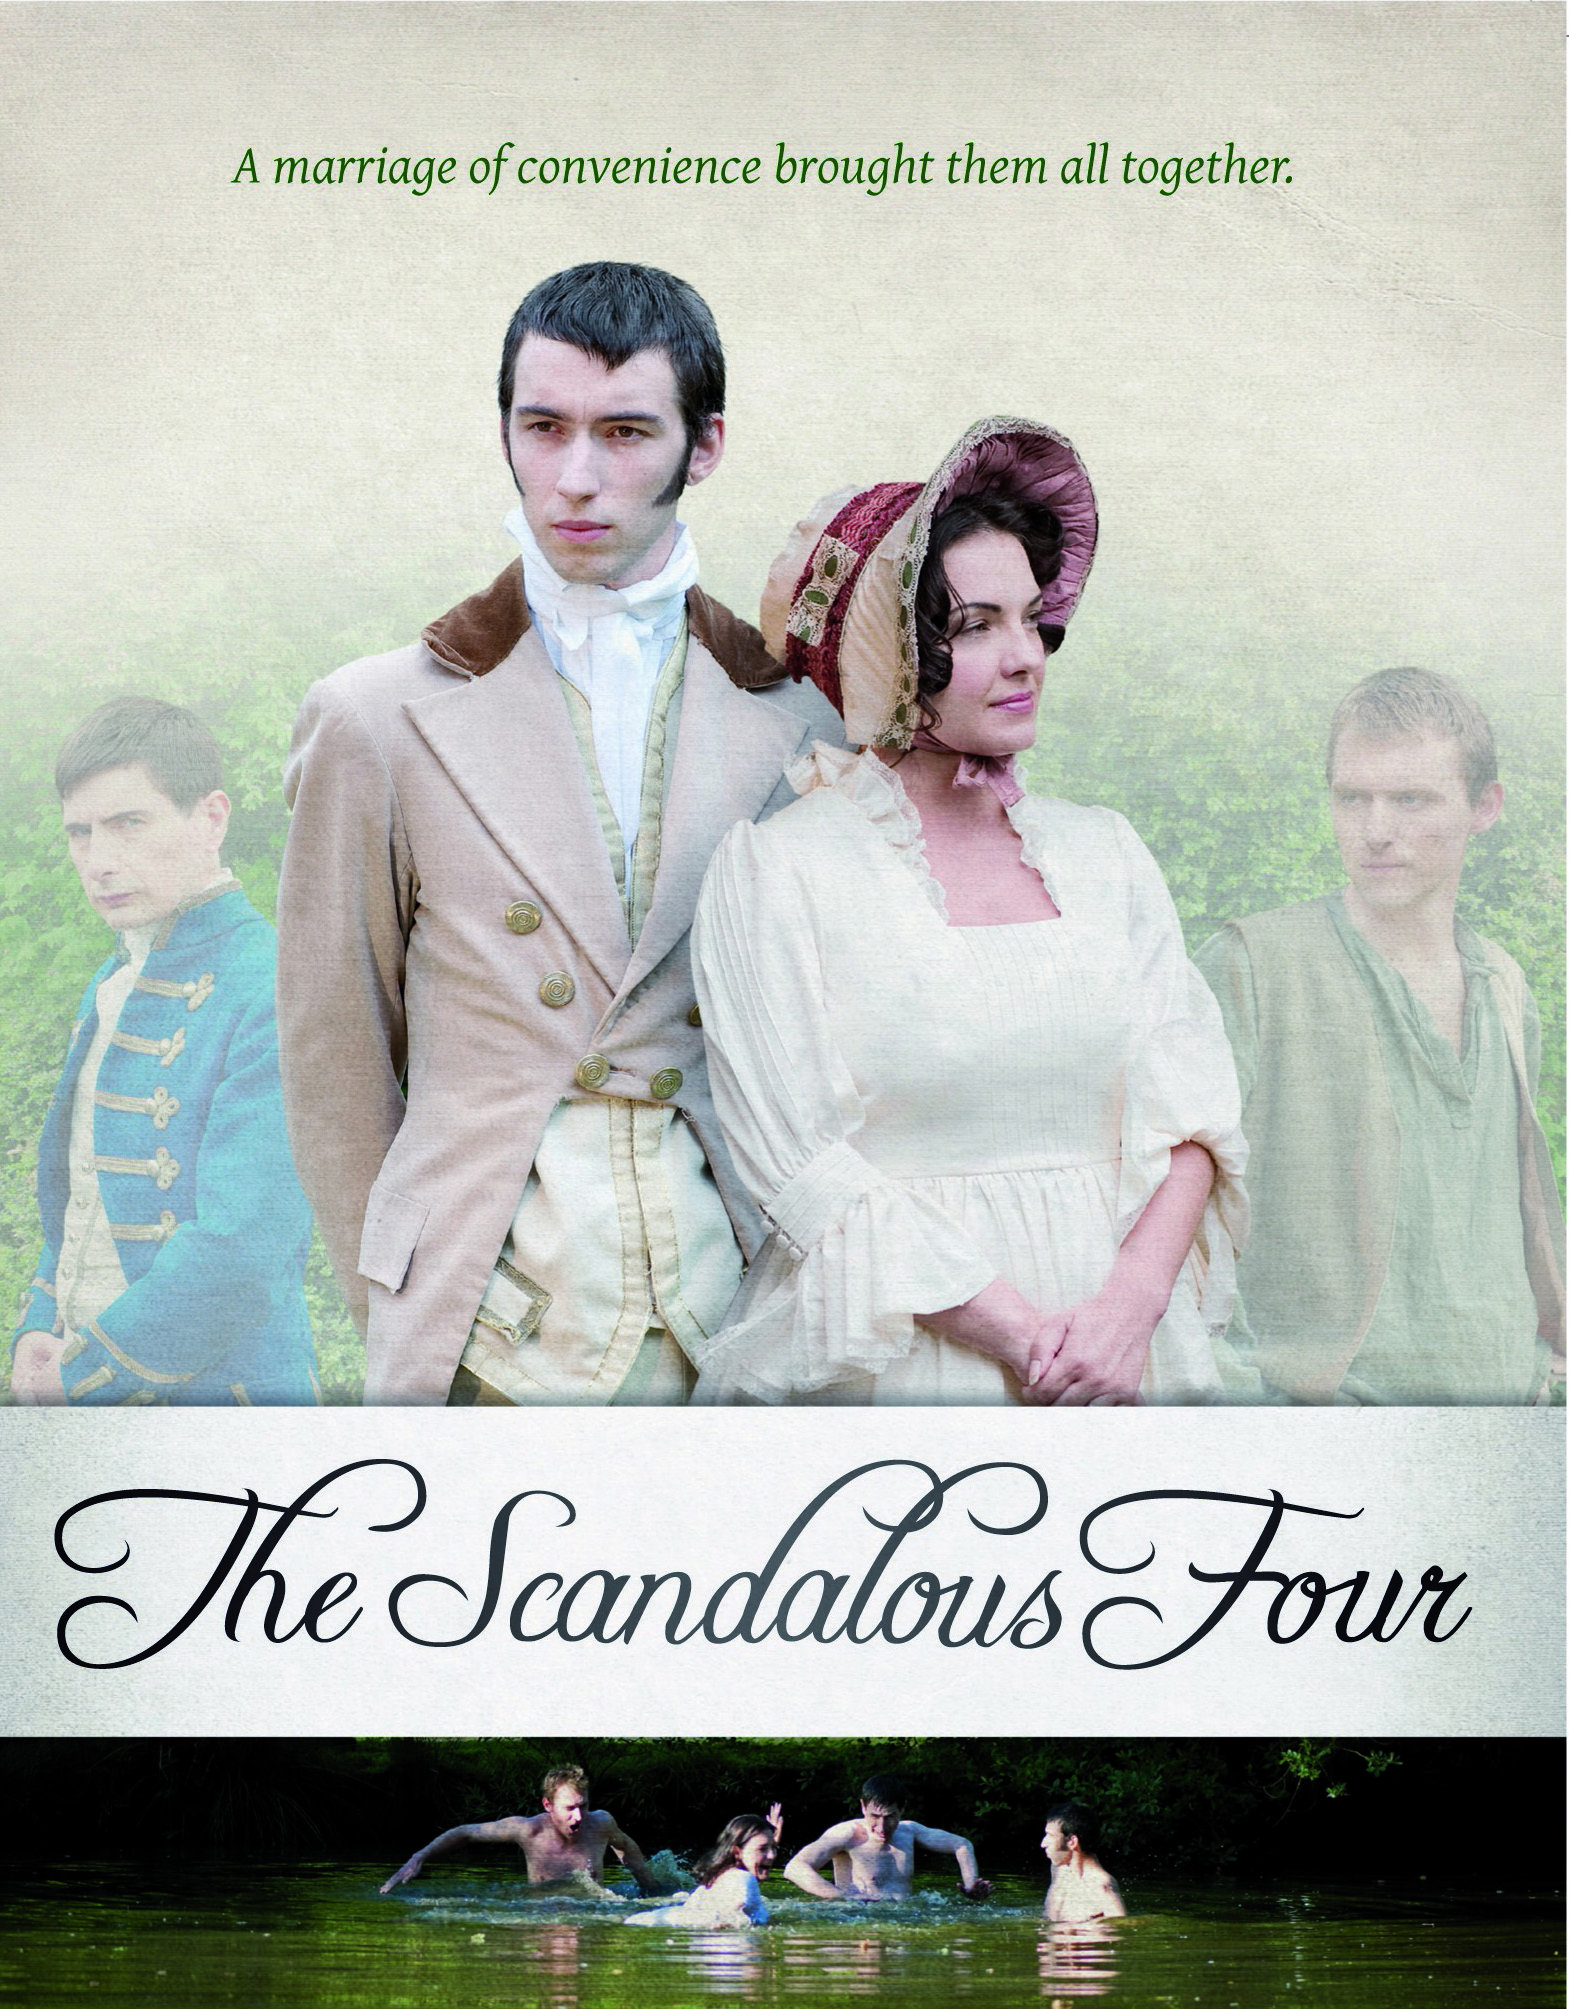 The Scandalous Four